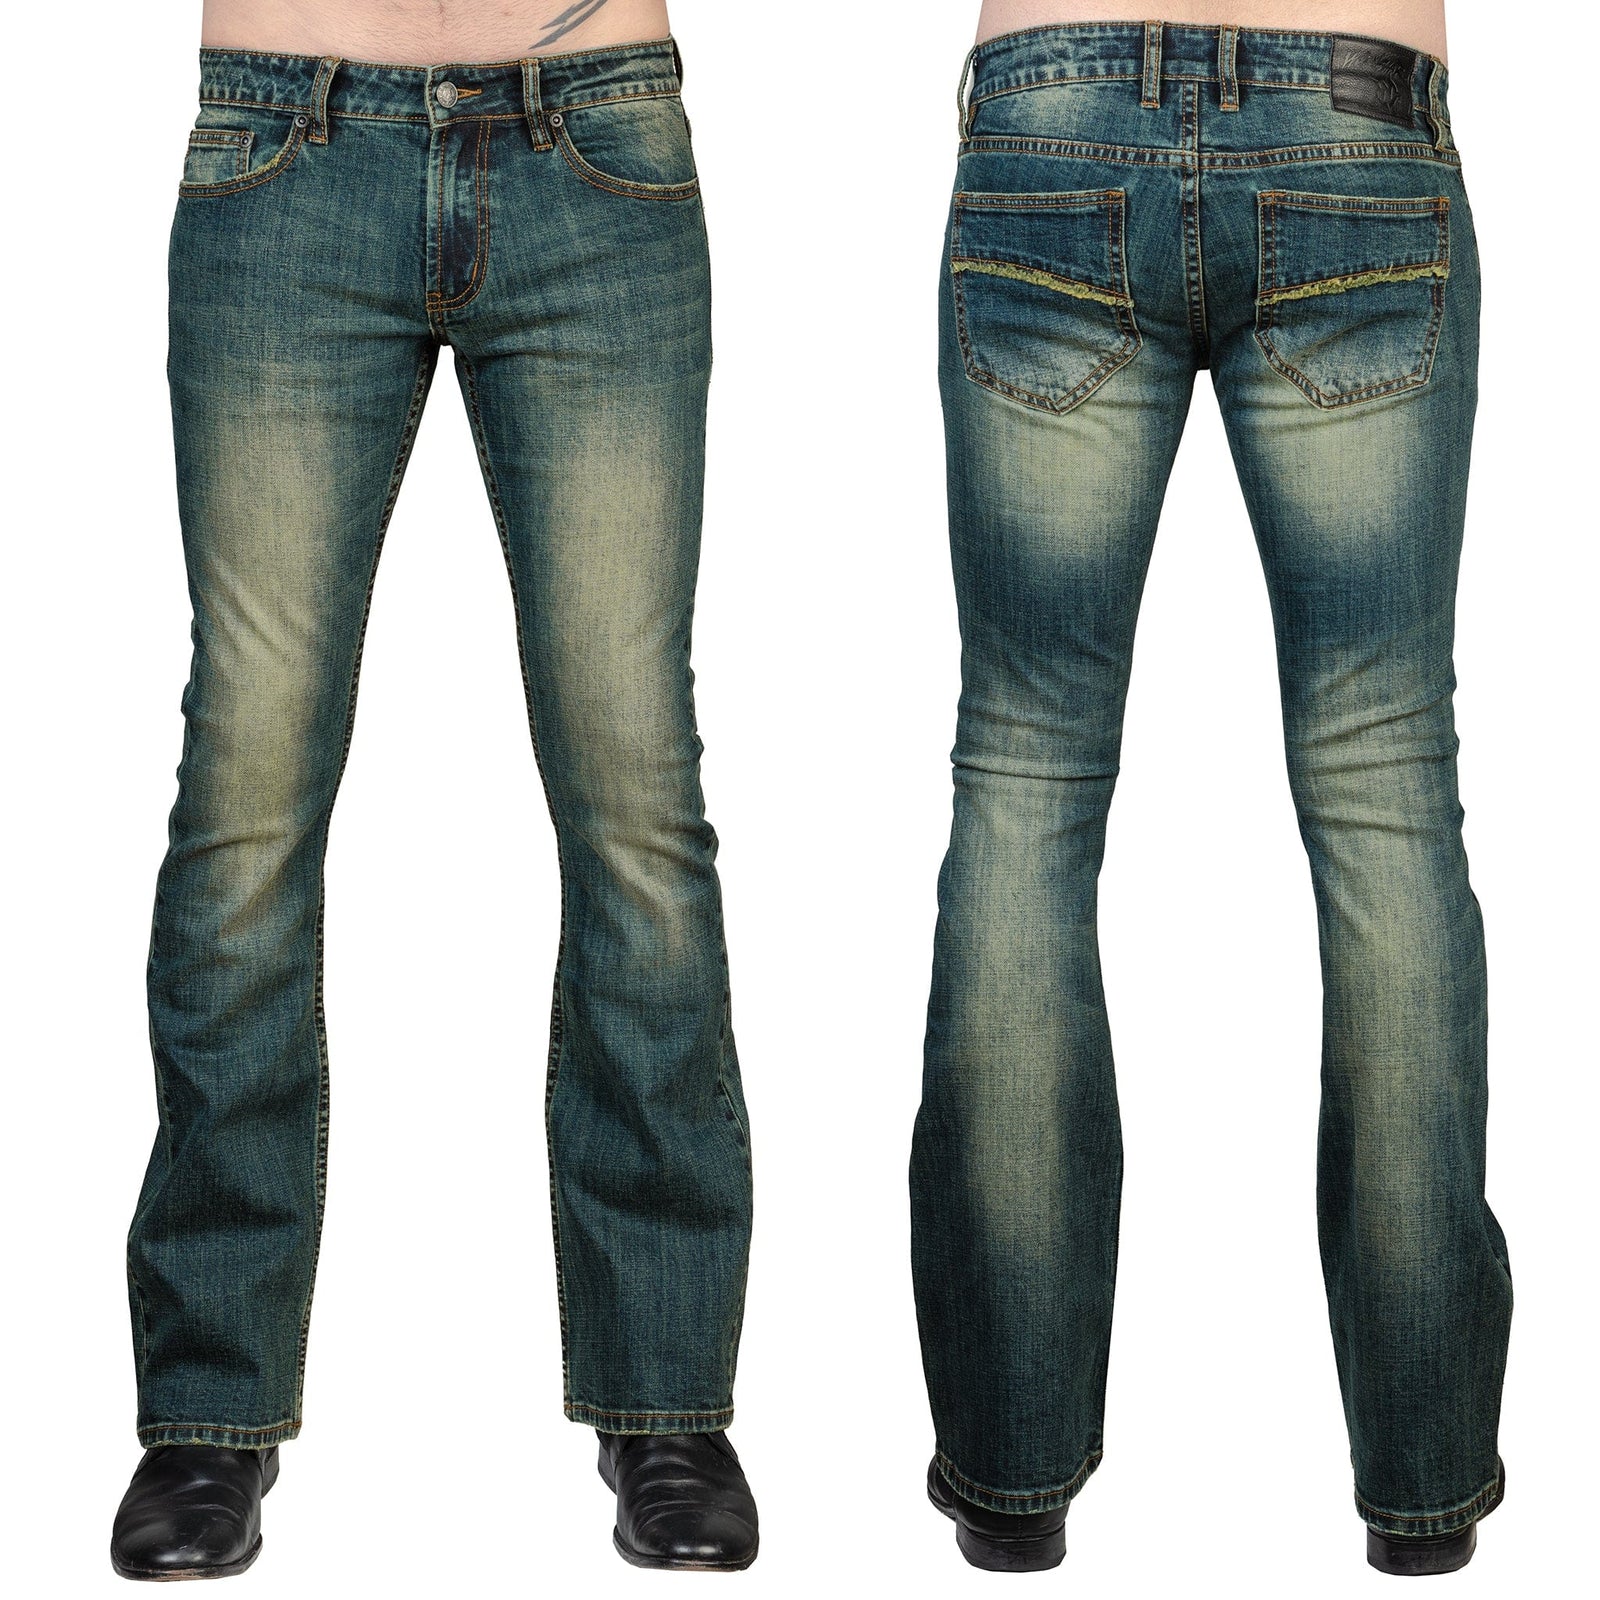 Wornstar Clothing Mens Jeans Hellraiser Denim Pants - Vintage Blue